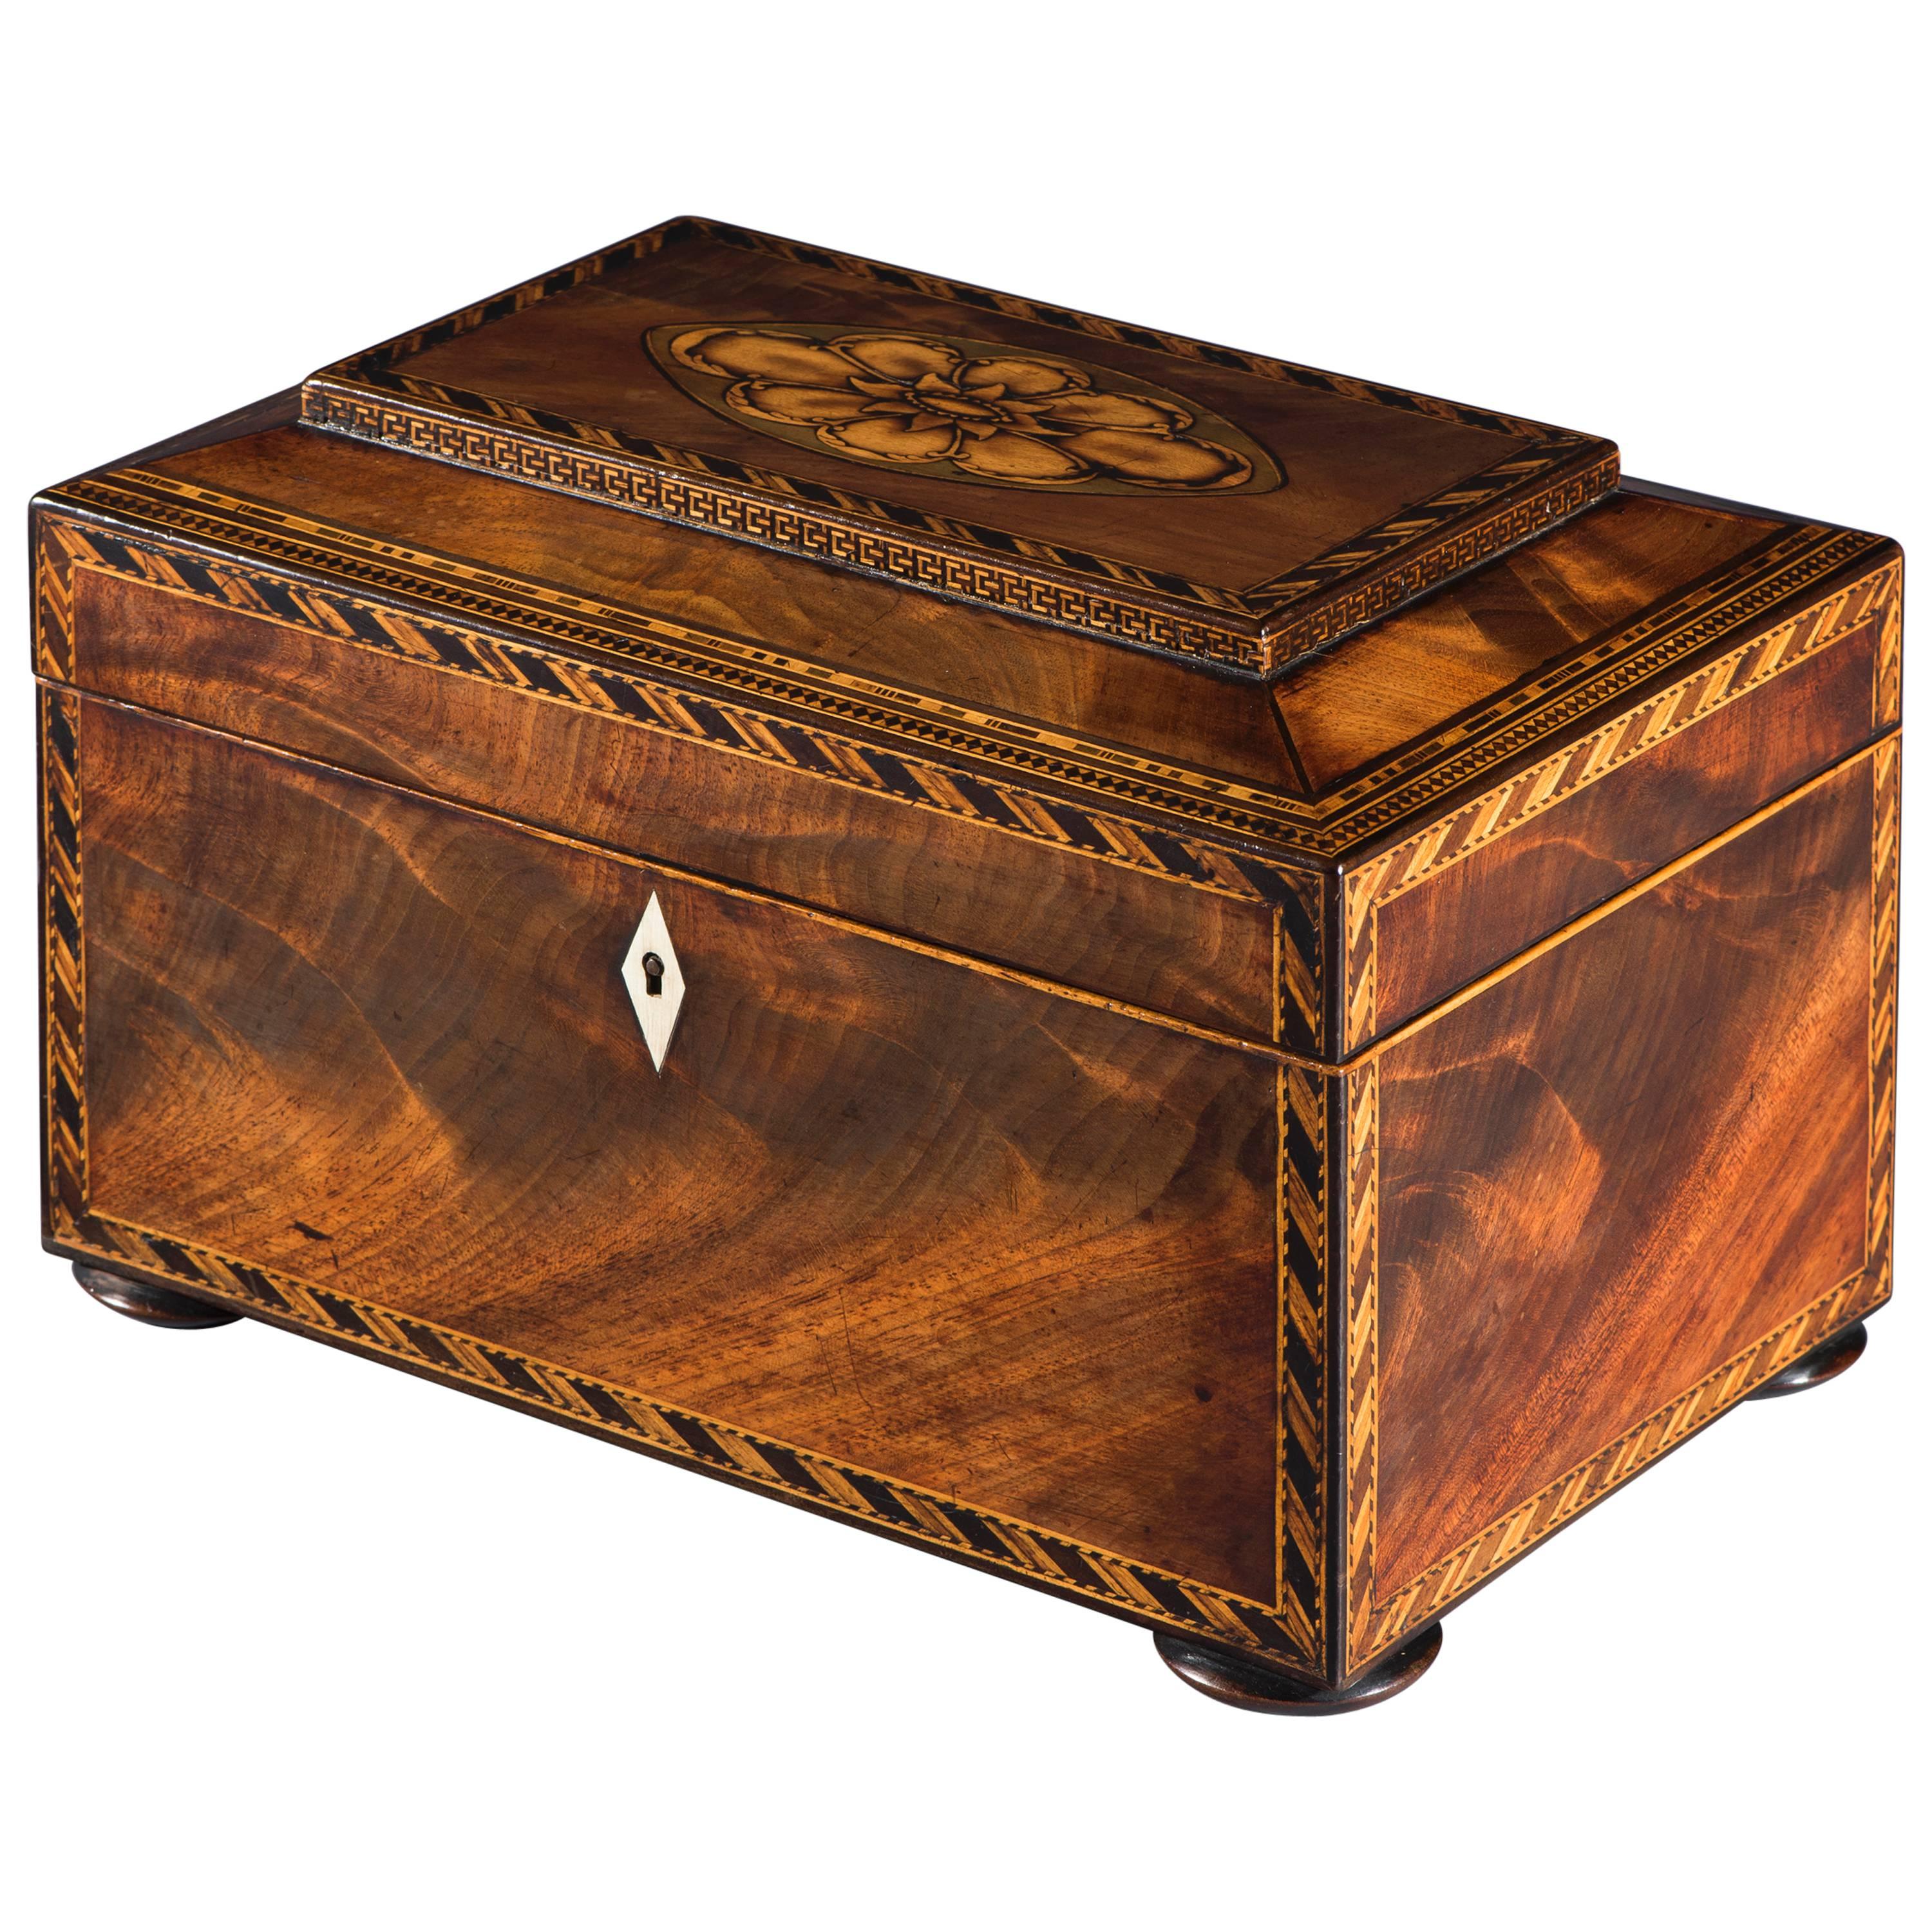 George III Period Flamed Mahogany Inlaid Jewellery Box